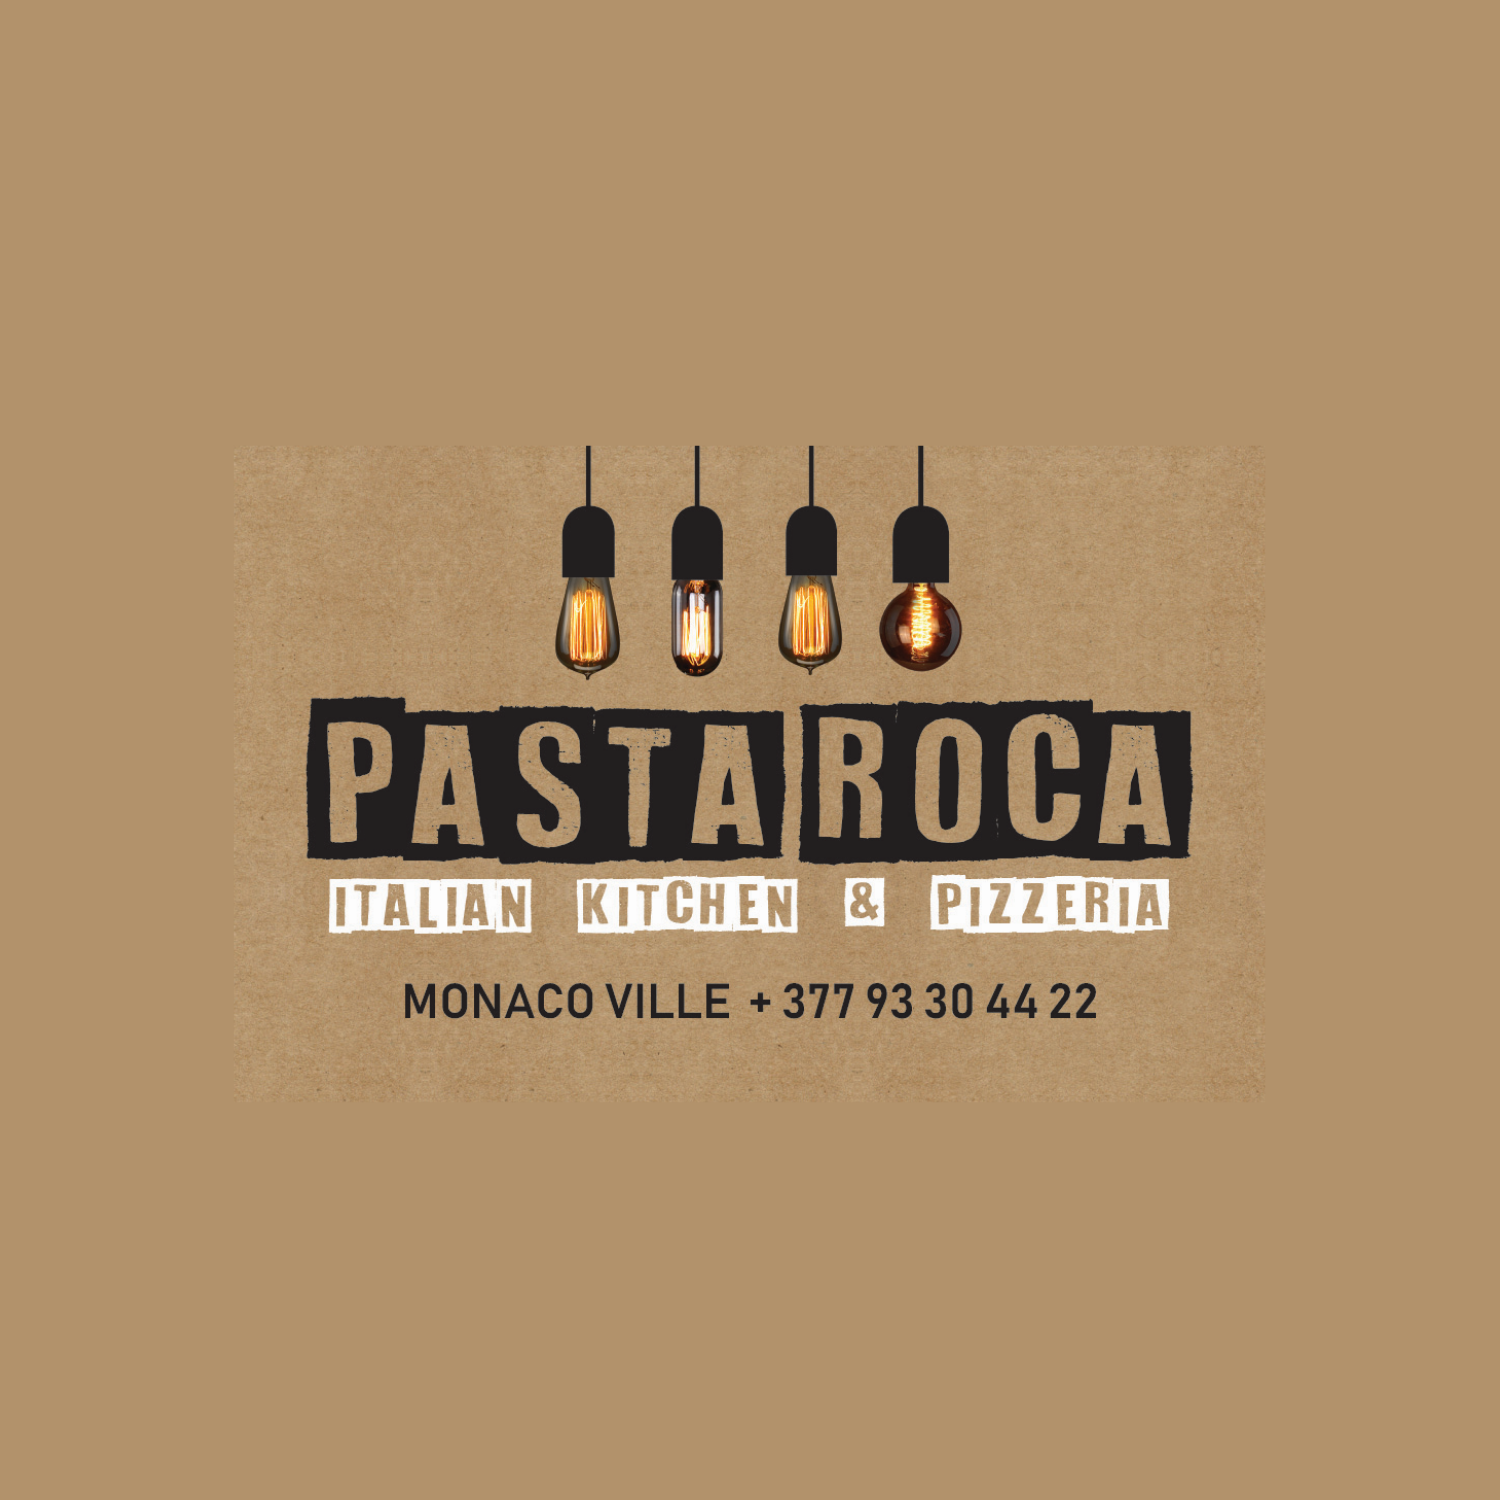 mónaco-carlo-app-commercant-pasta-roca-restaurante-italiano